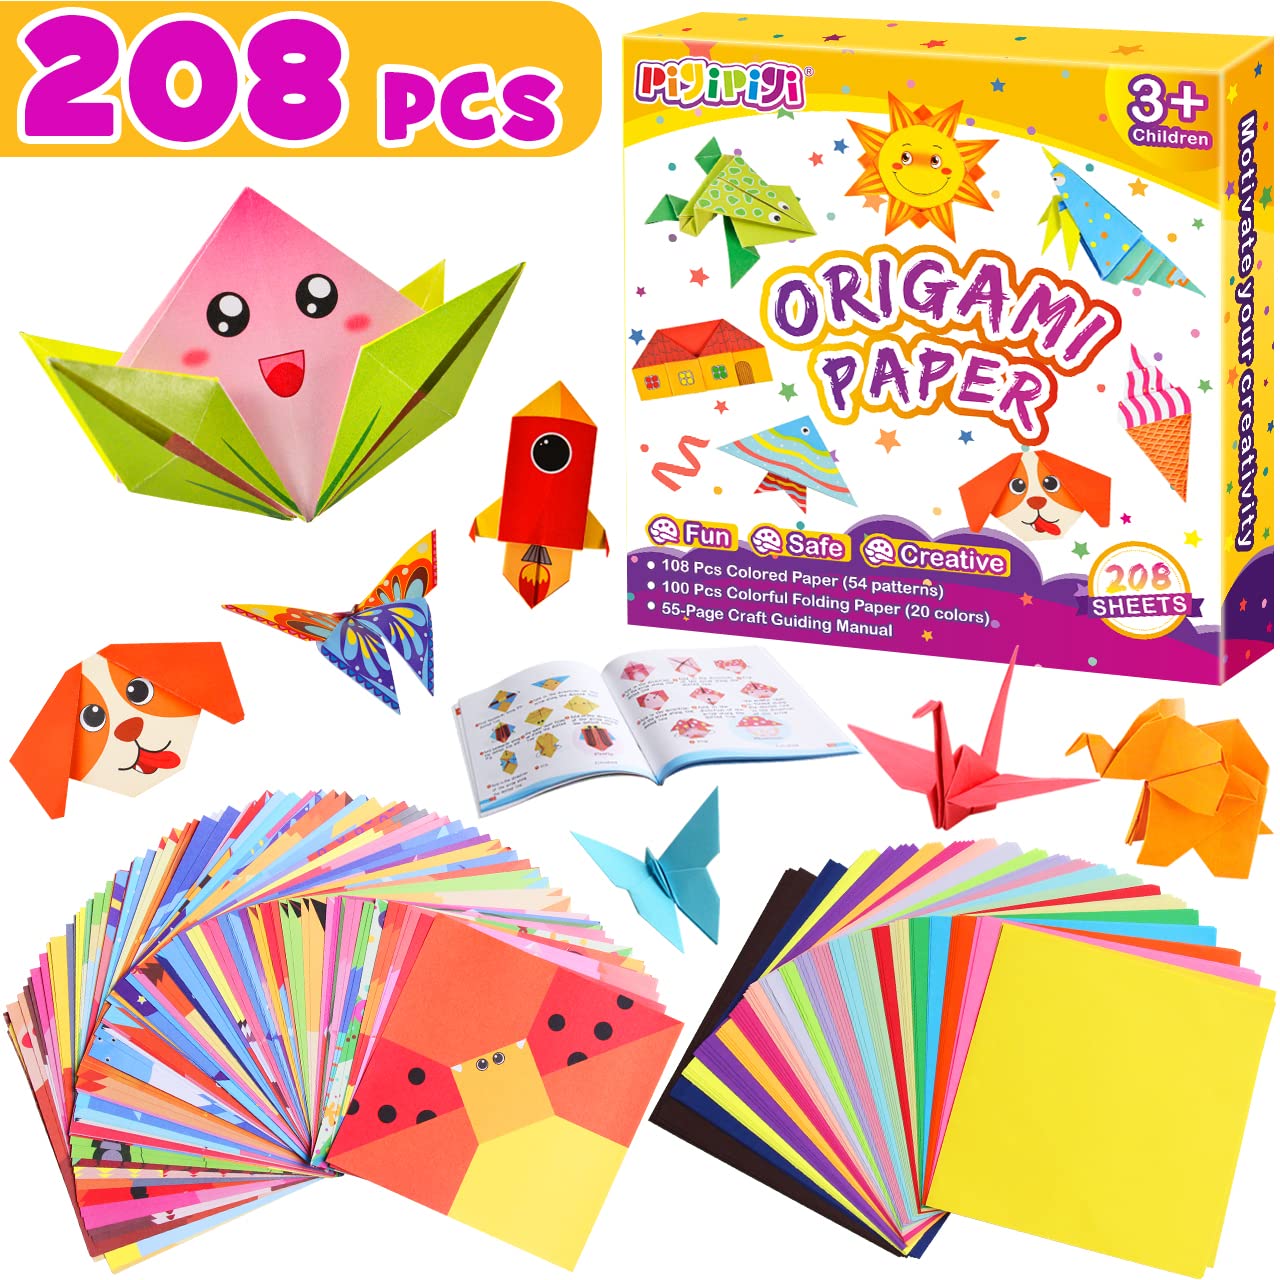 Animal Origami Kit –